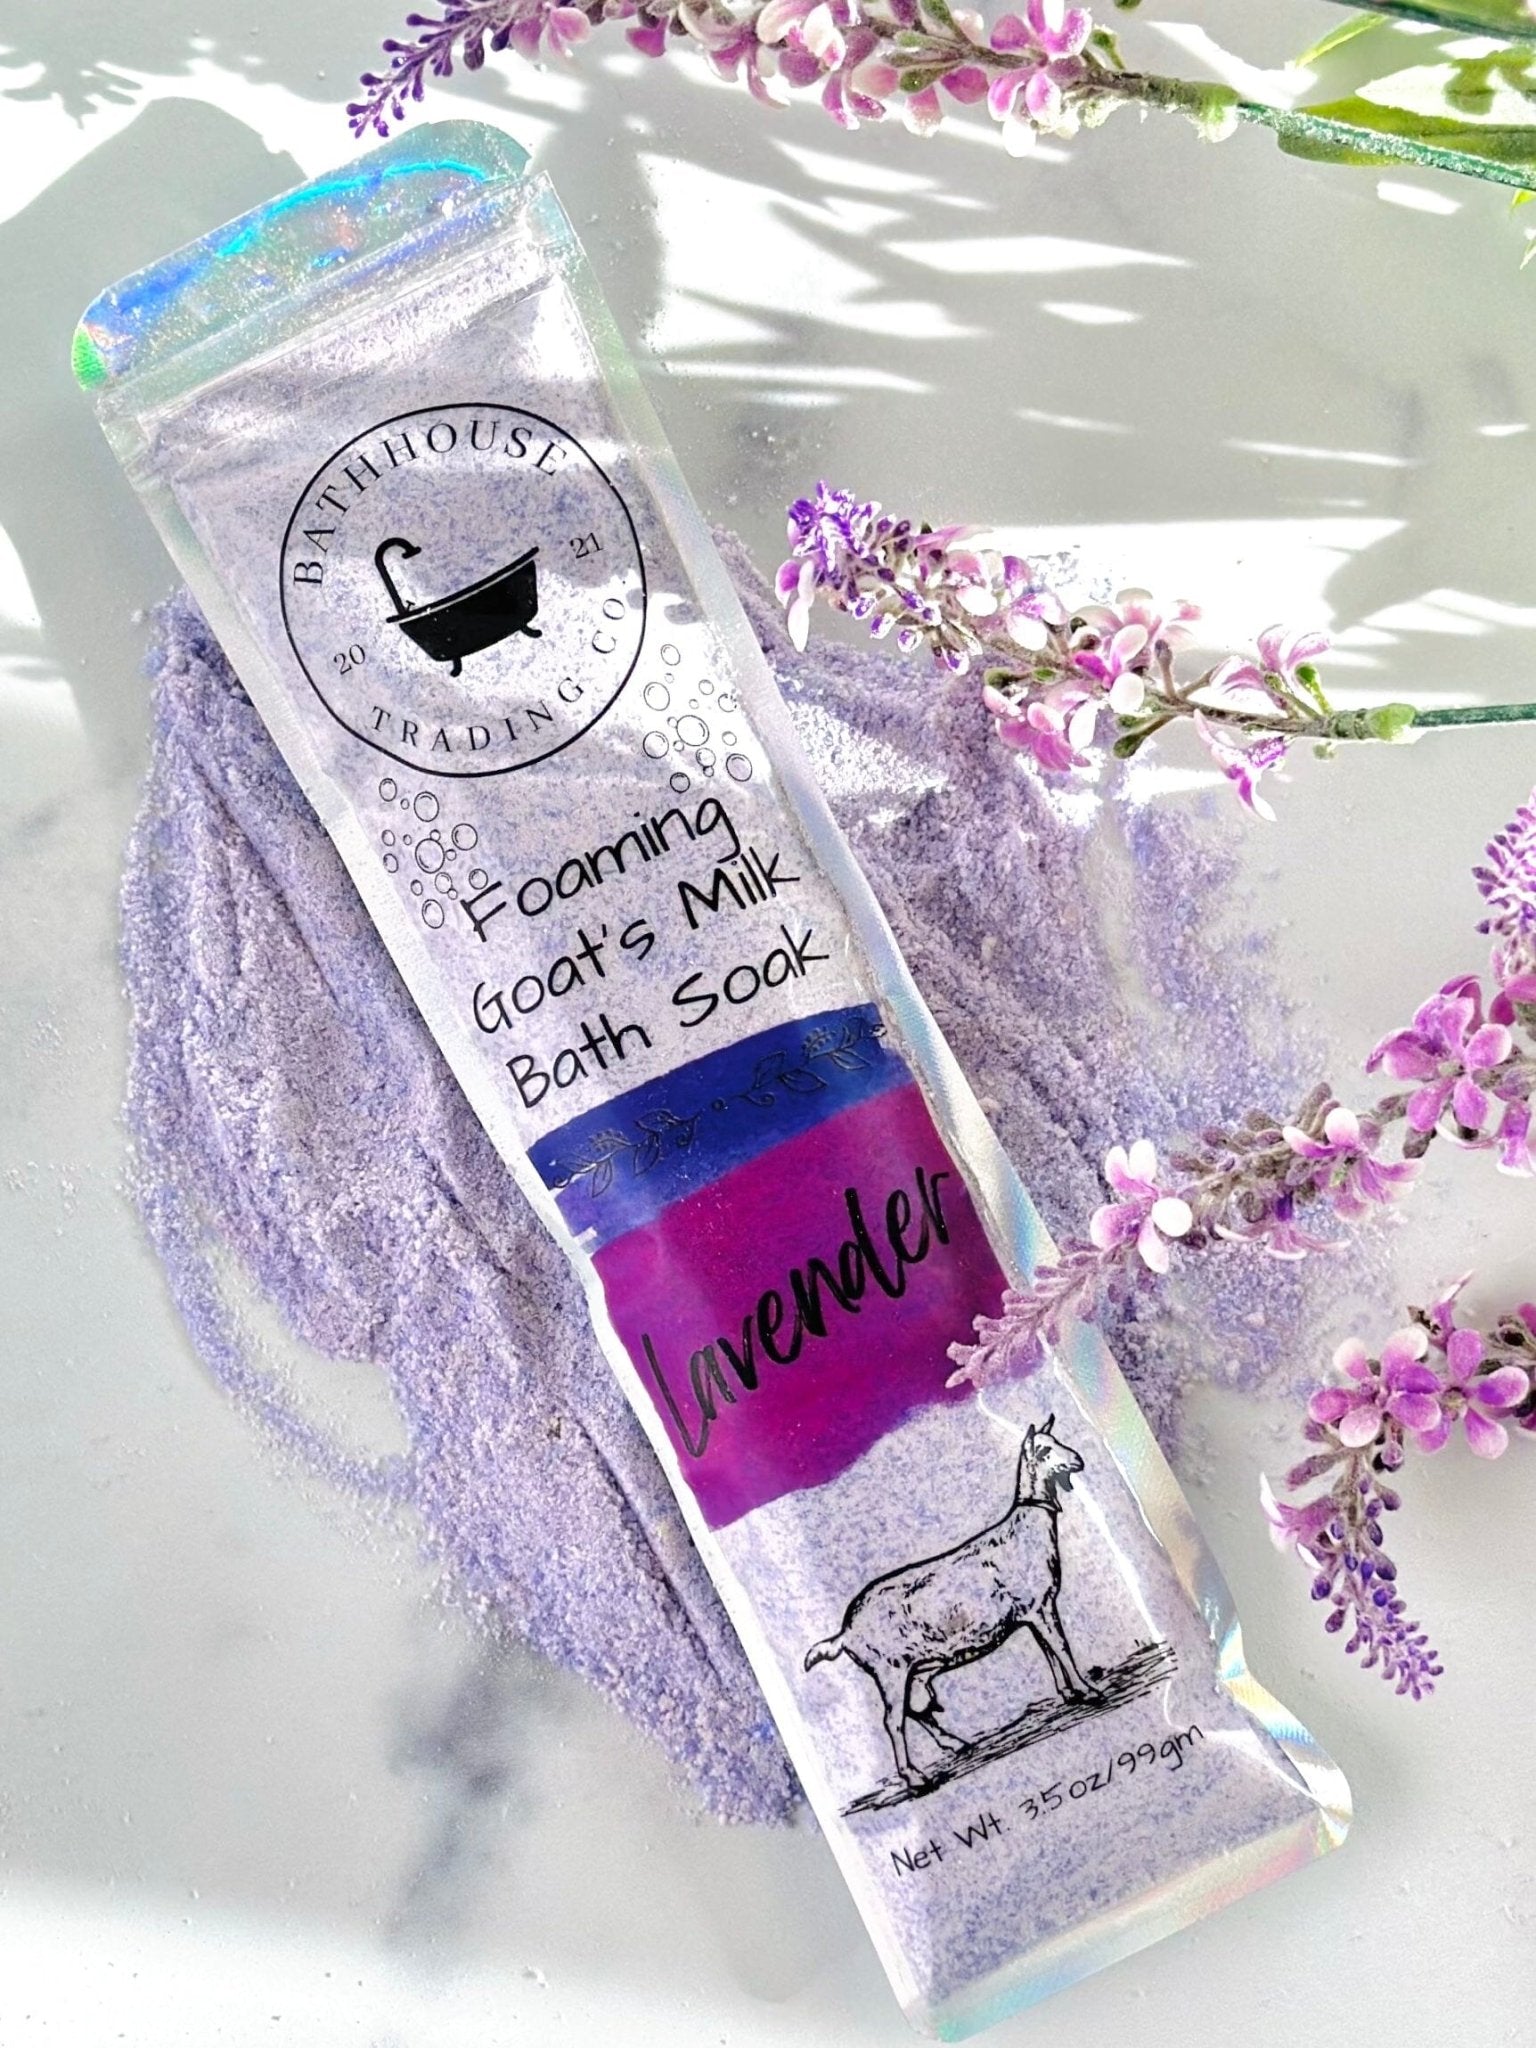 Foaming Goat's Milk Soak Lavender - Bathhouse Trading Company